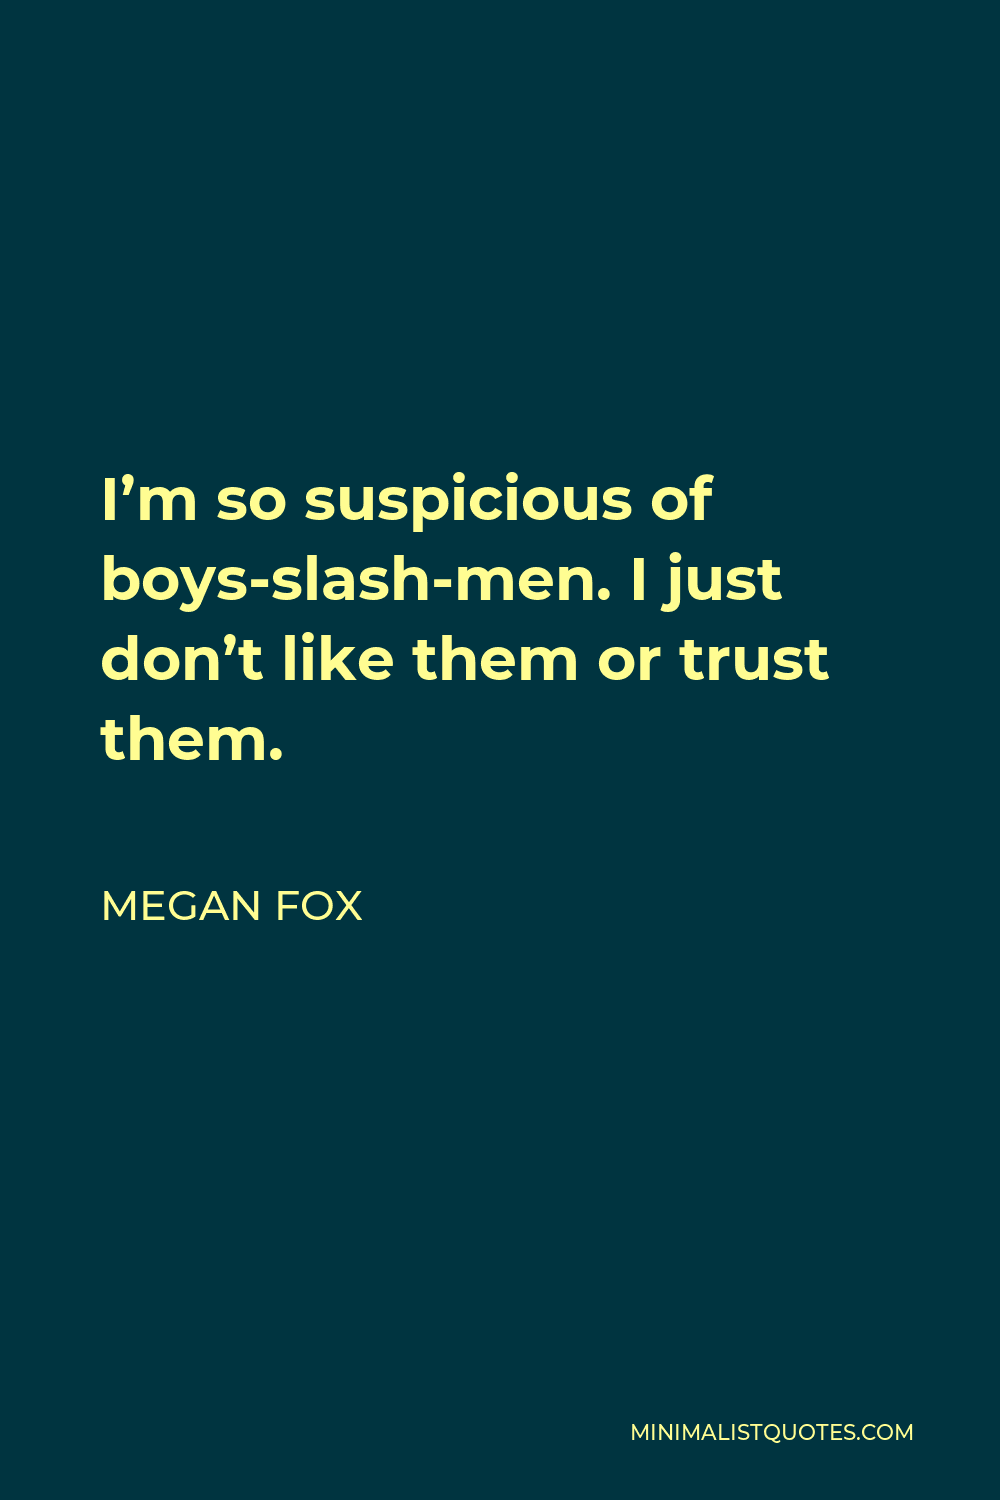 Megan Fox Quote - I’m so suspicious of boys-slash-men. I just don’t like them or trust them.